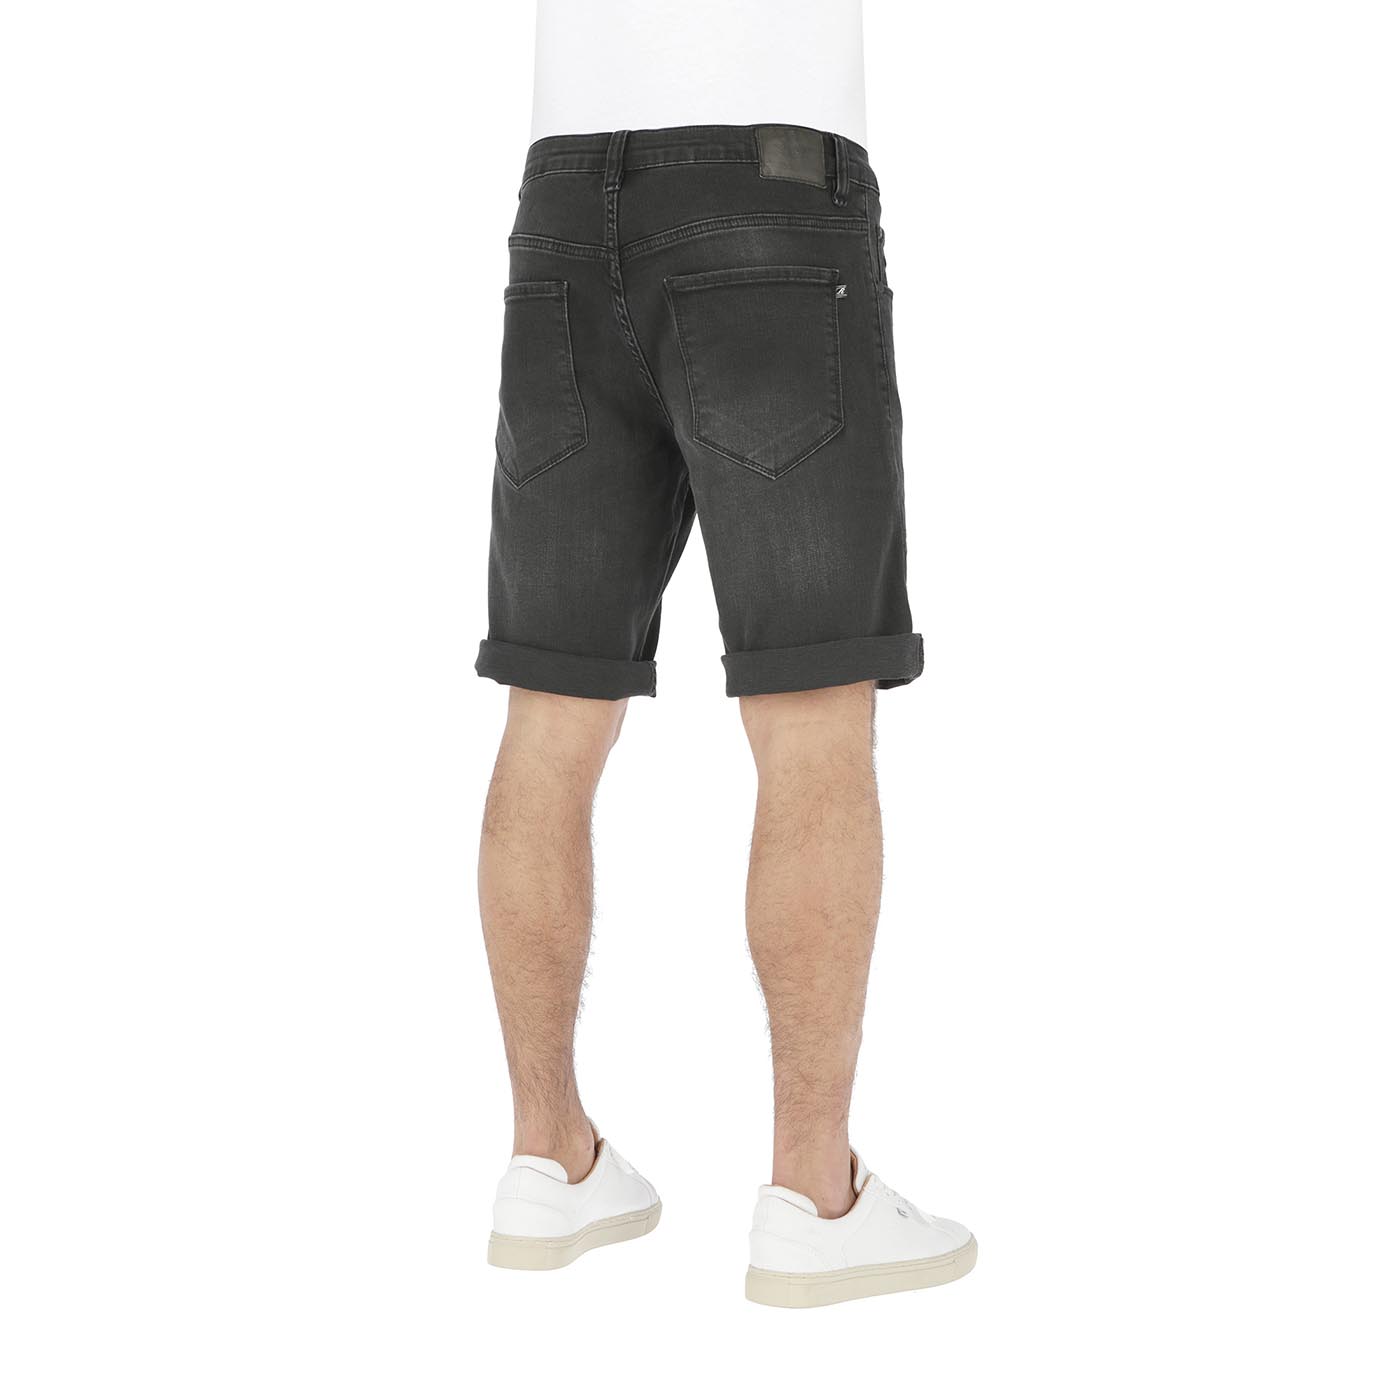 Reell Jeans Rafter Shorts 2 Black Denim